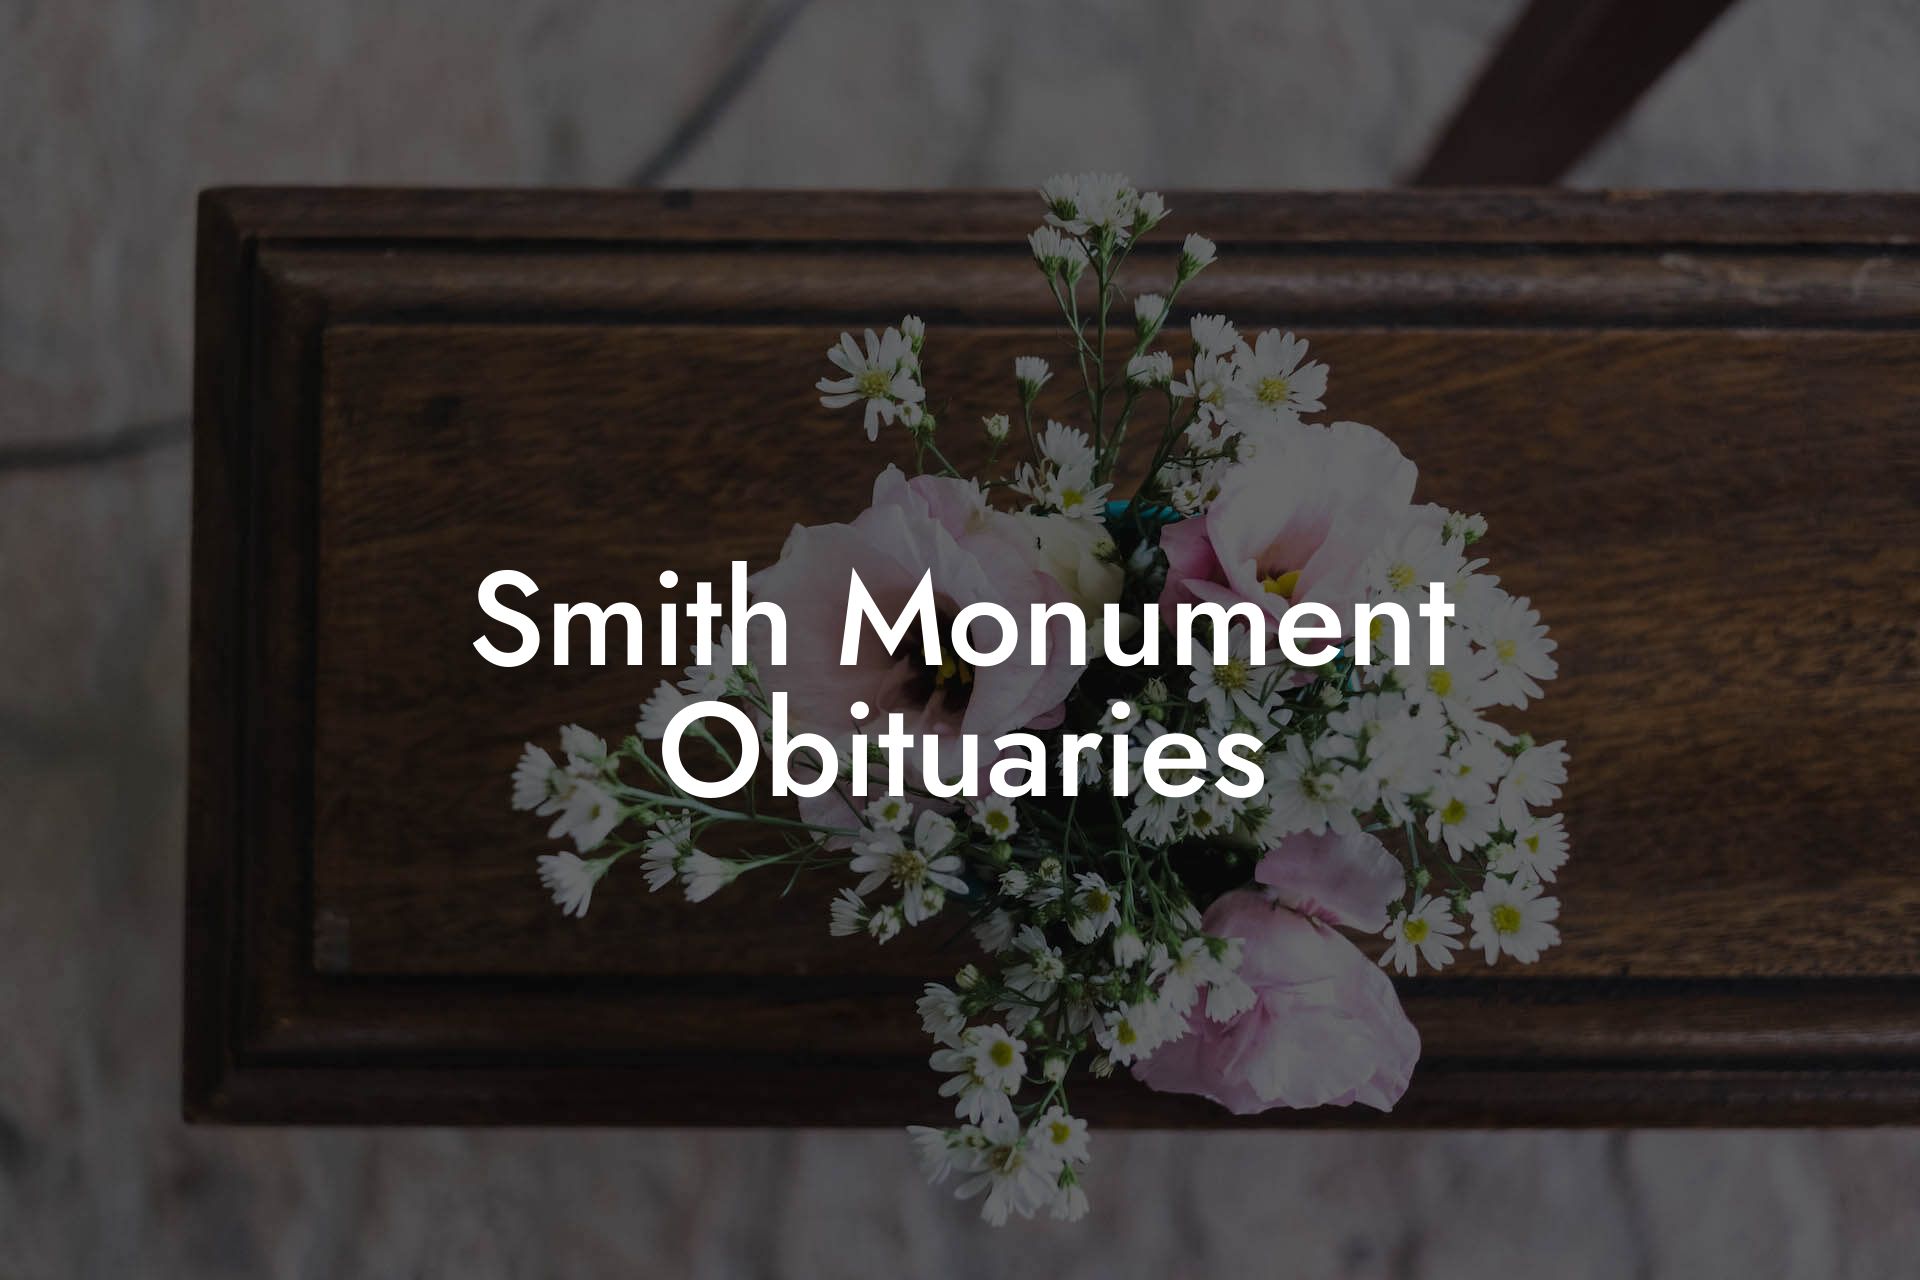 Smith Monument Obituaries